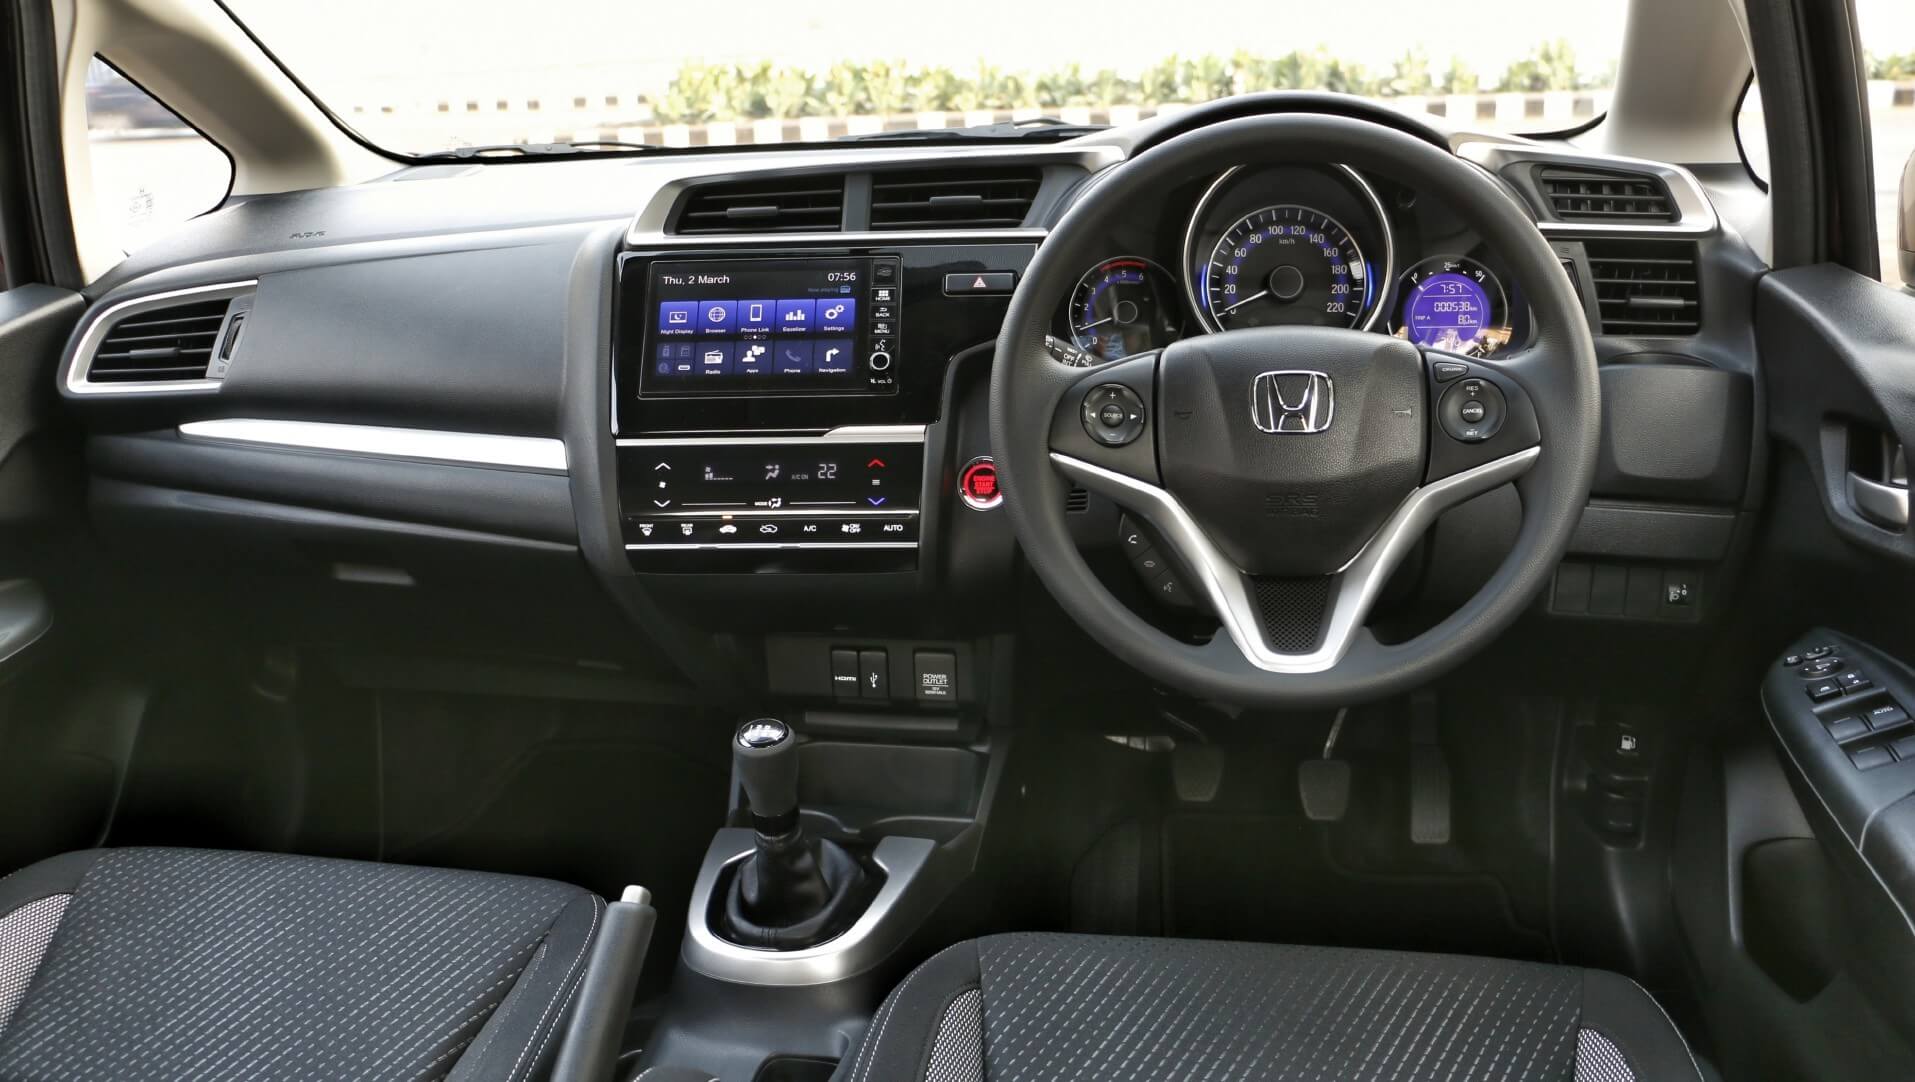 Honda WRV Interiors